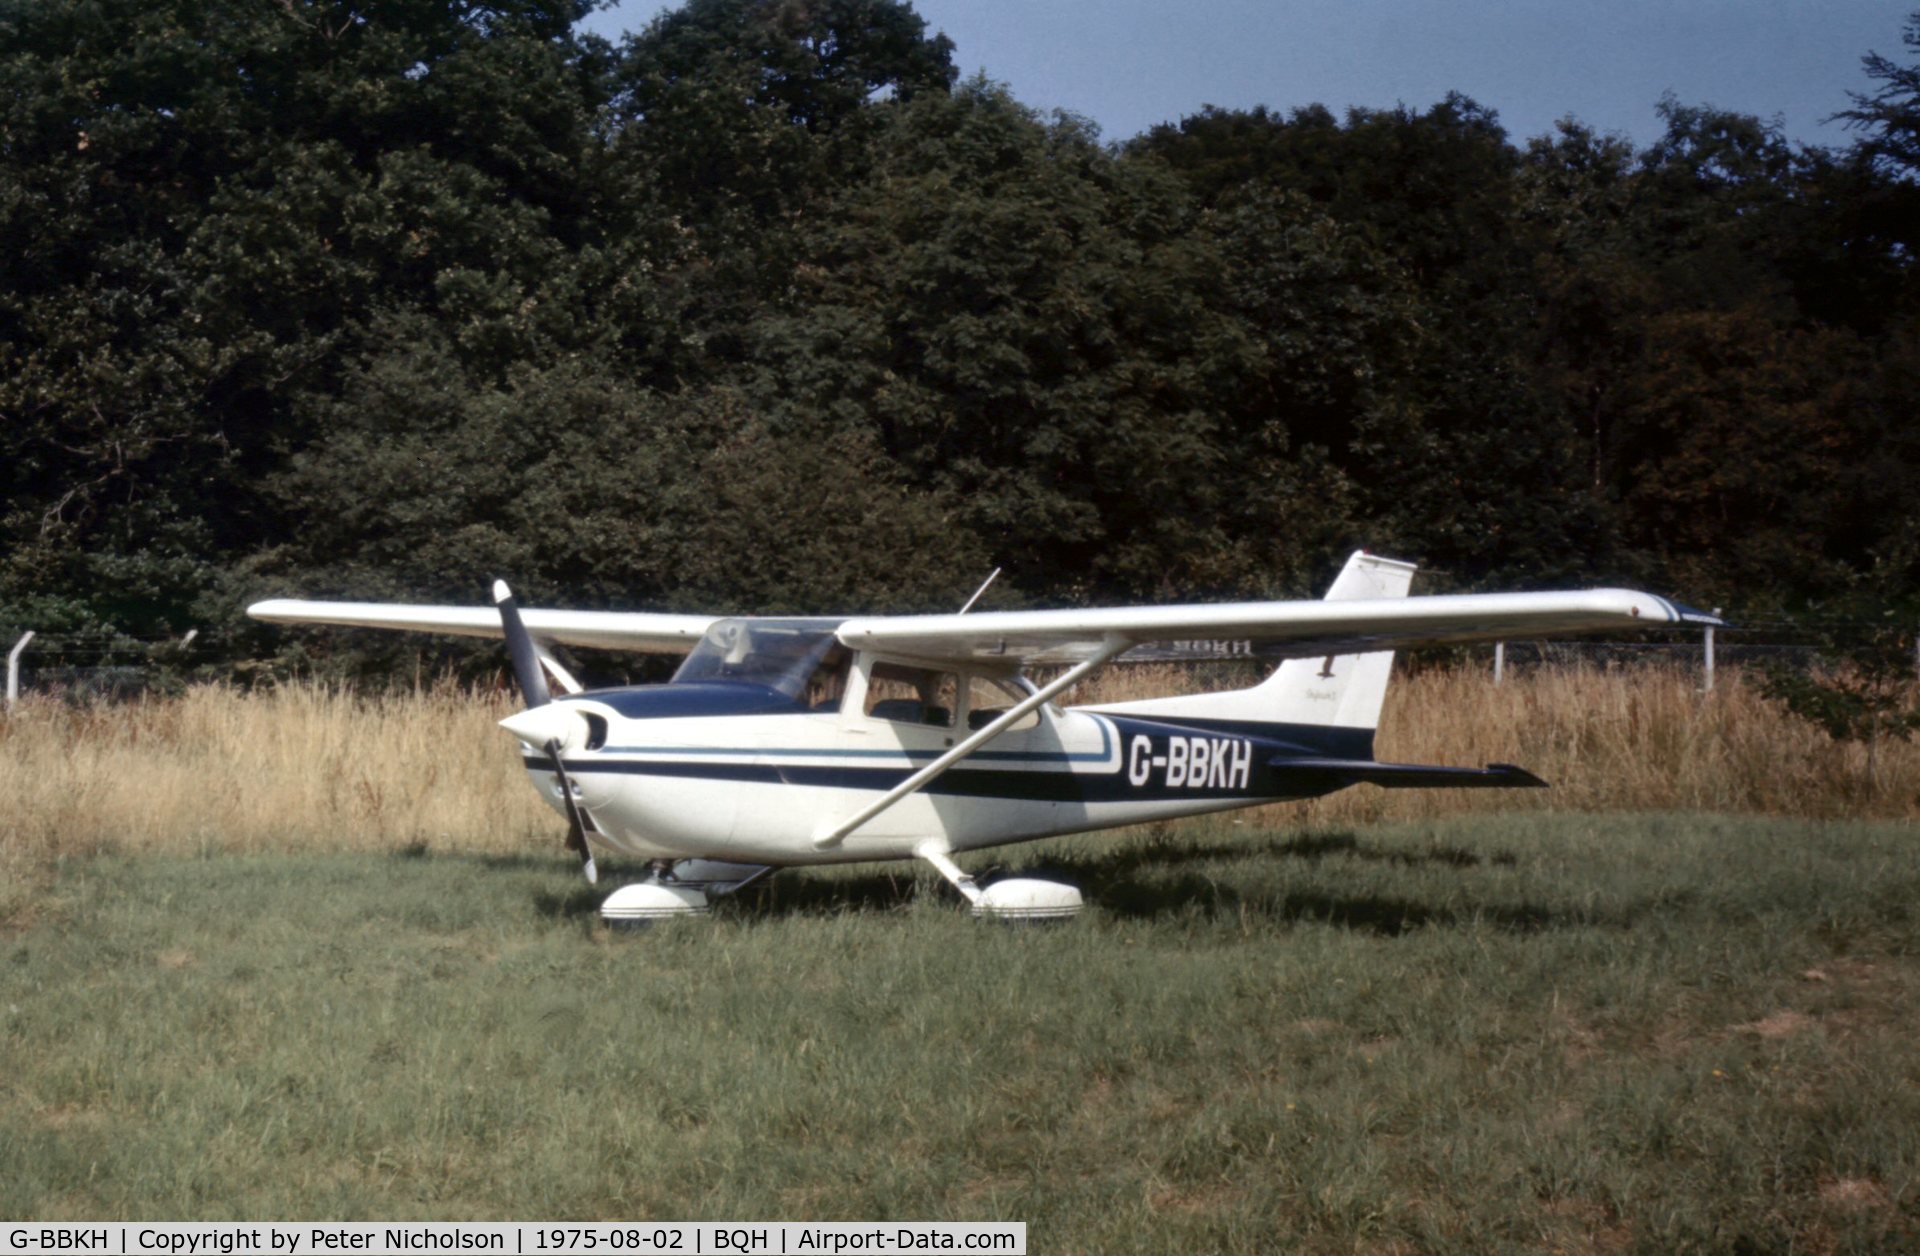 G-BBKH, 1973 Reims F172M Skyhawk Skyhawk C/N 1050, Cessna F.172M seen at Biggin Hill in the Summer of 1975.